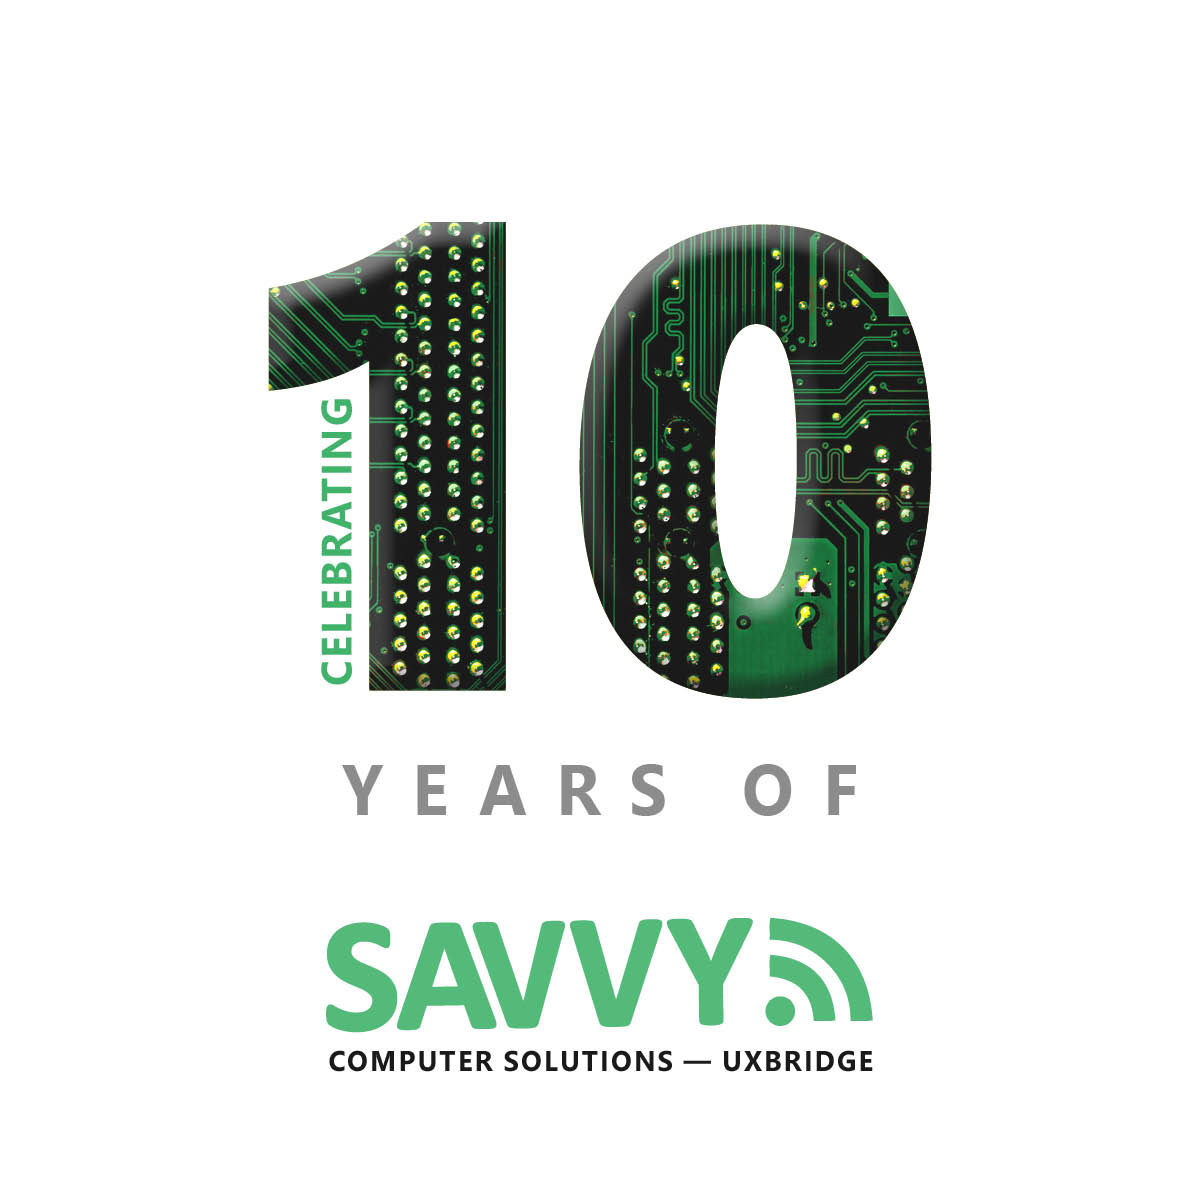 Savvy Computer Solutions 71 1st Ave, Uxbridge Ontario L9P 1J8